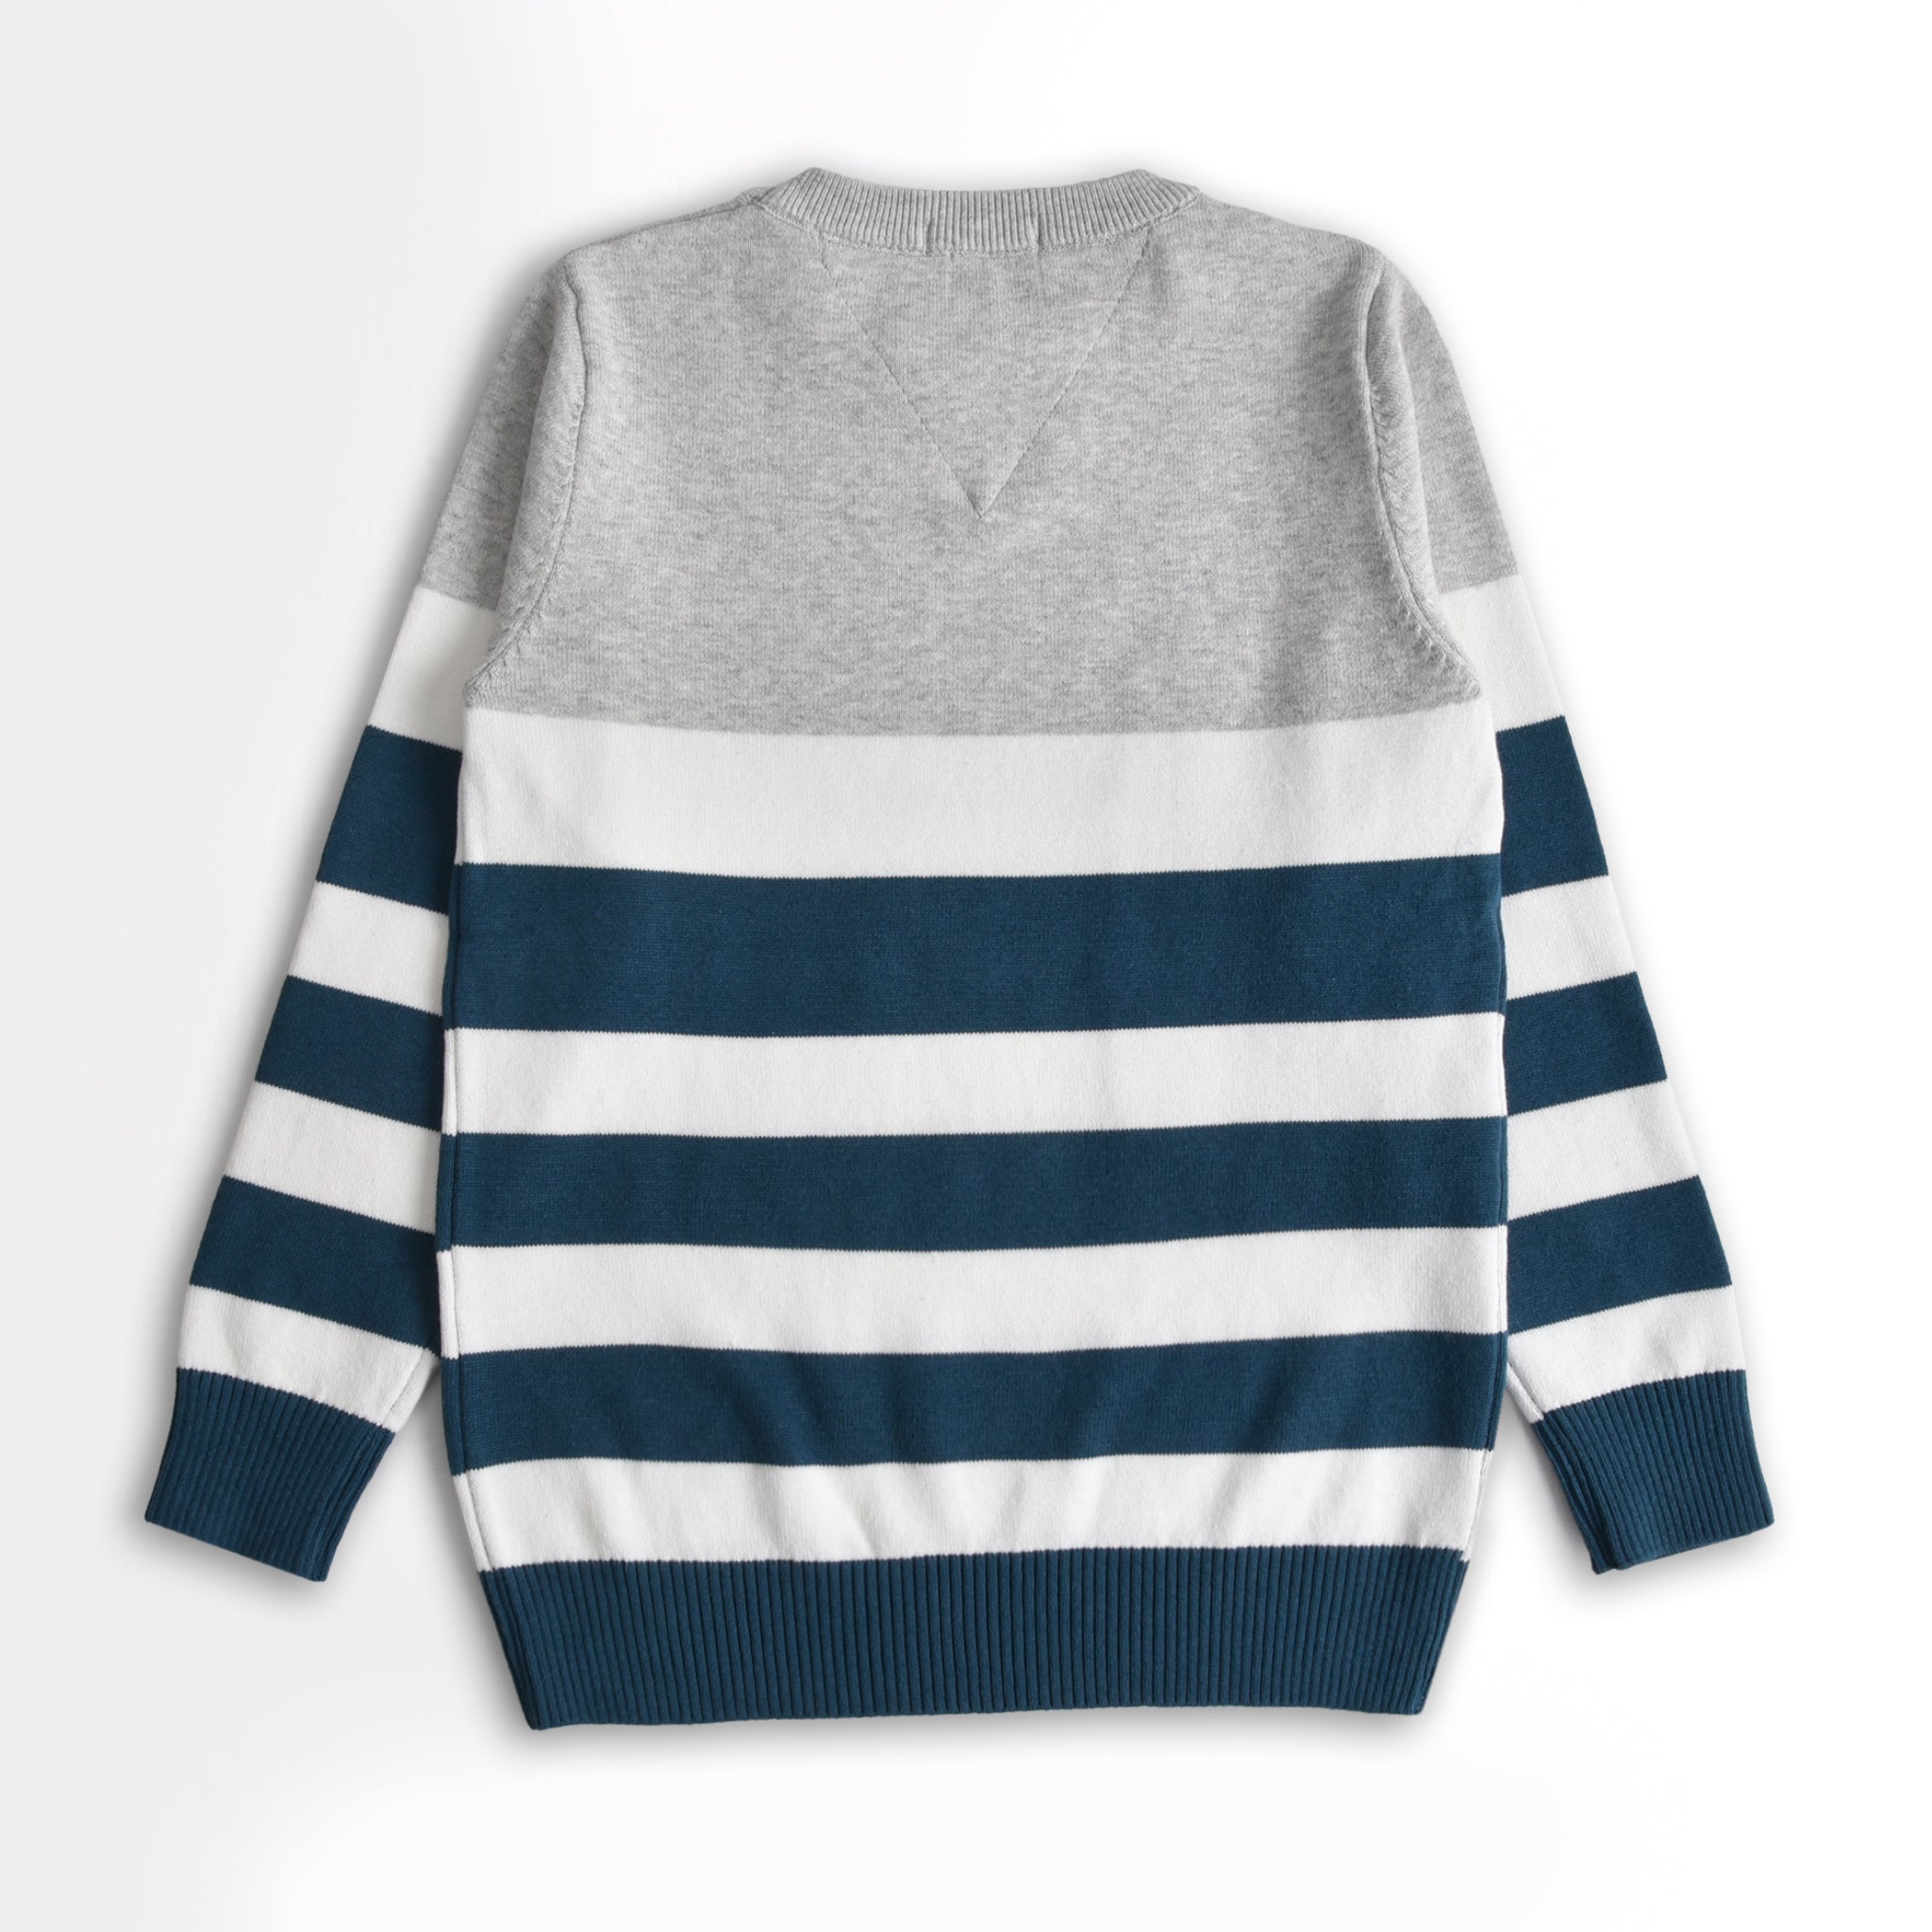 Teal & Grey Striped Sweater